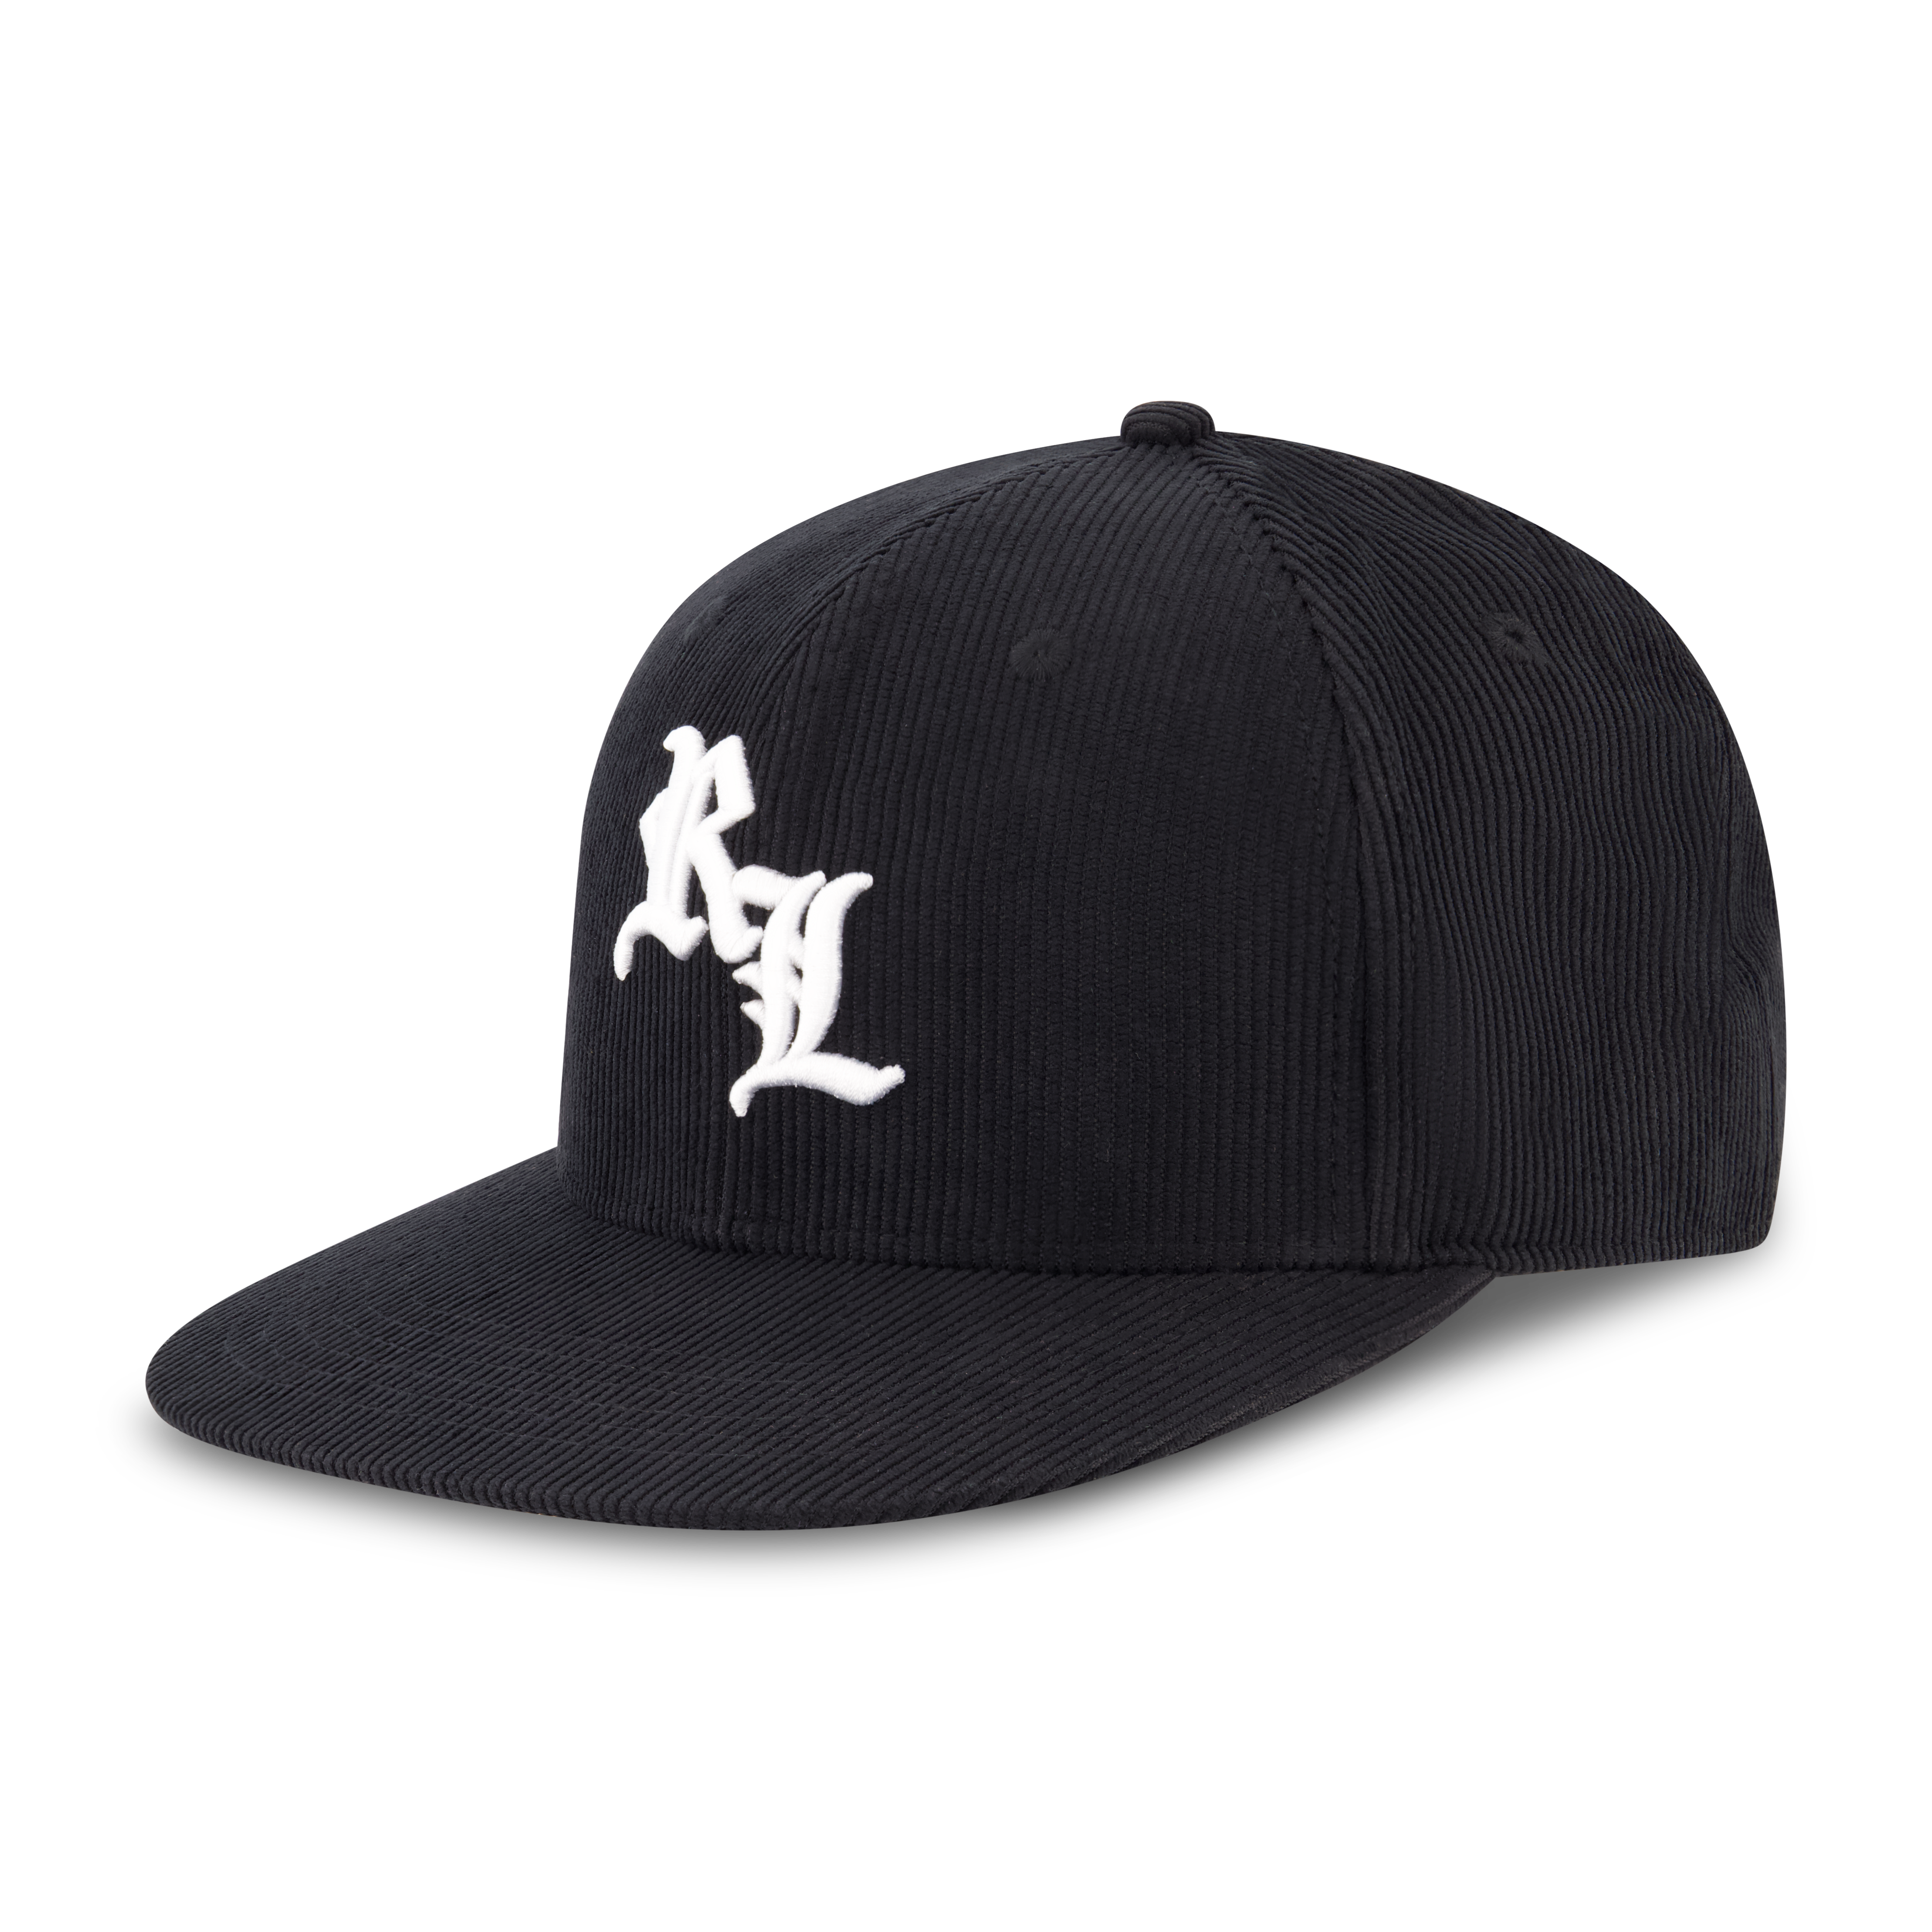 RL Cord Black Hat